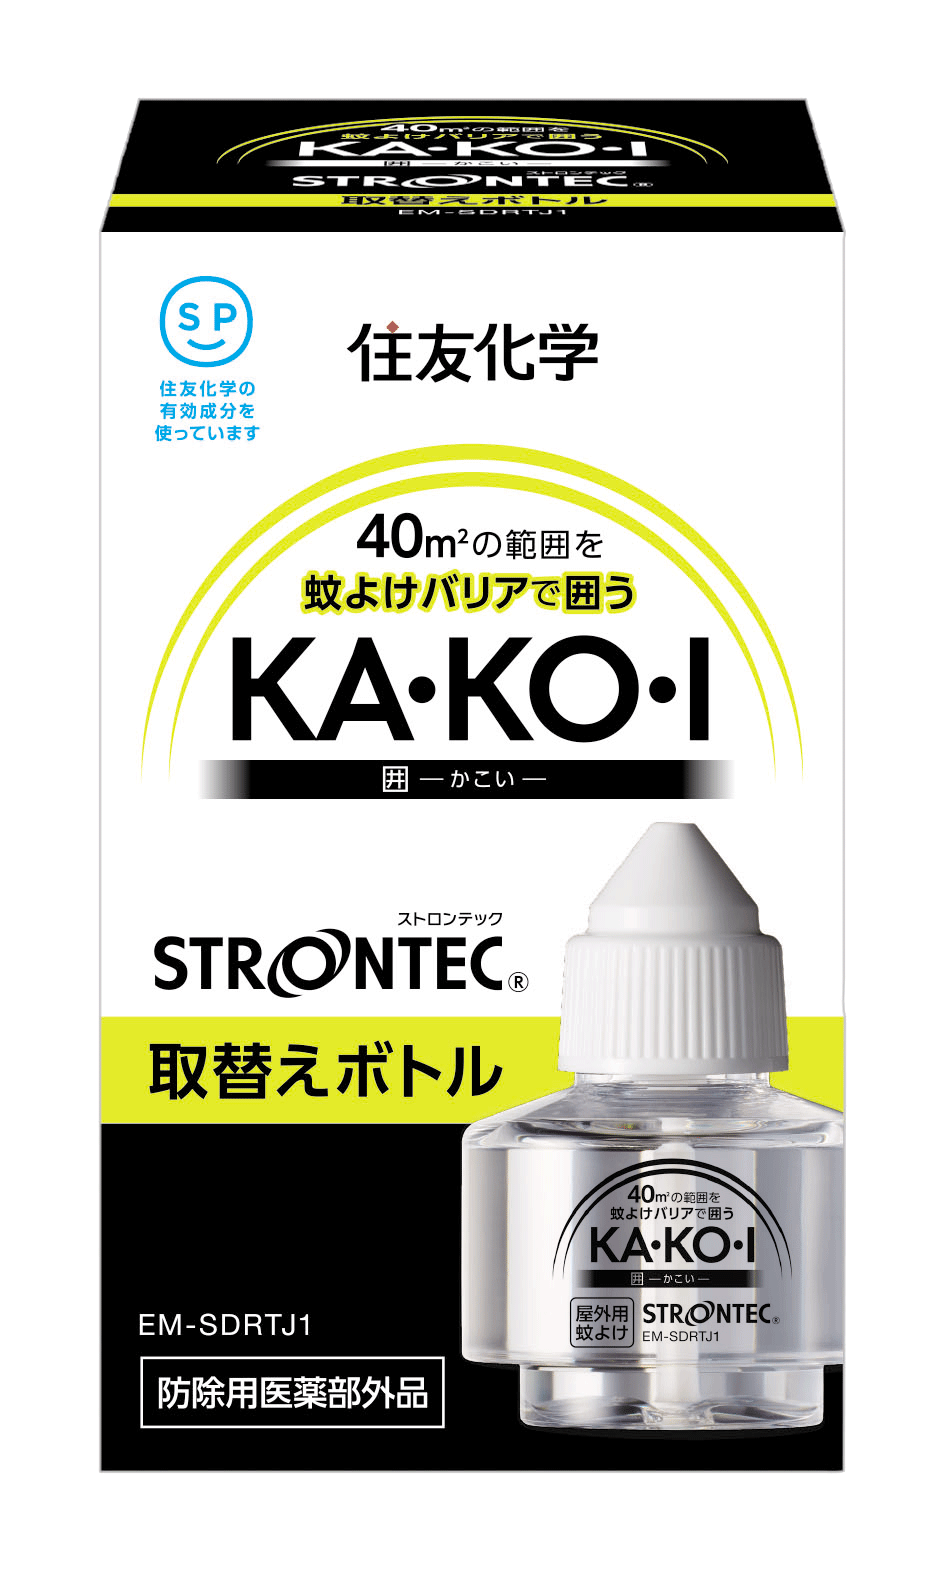 STRONTEC® 屋外用蚊よけKA・KO・I 取替えボトル | 住化エンバイロメンタルサイエンス株式会社